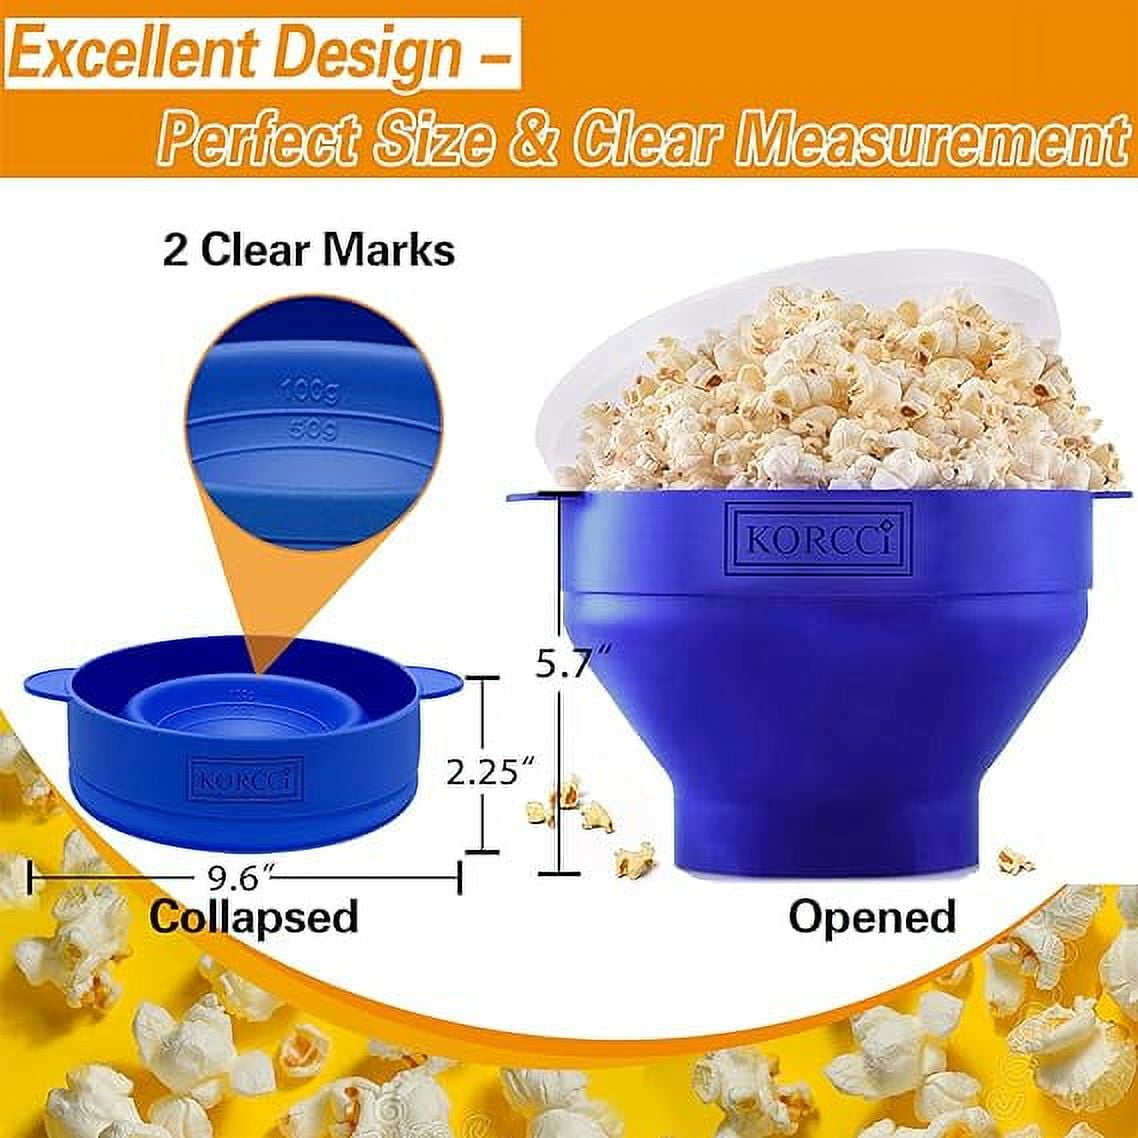 Salbree Microwave Popcorn Popper - Blue 